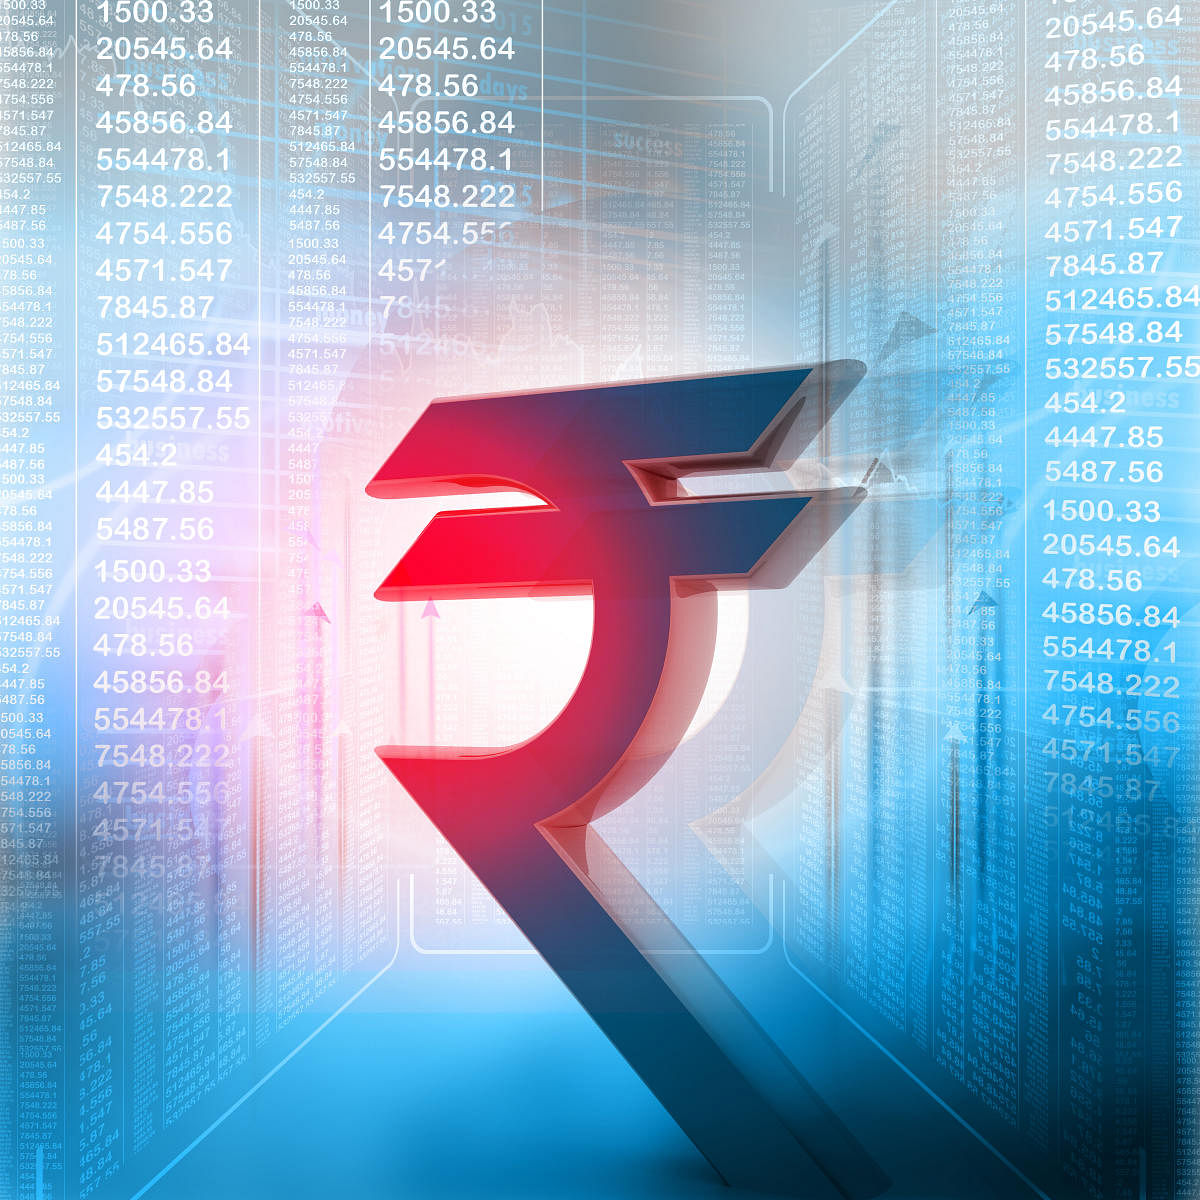 Indian rupee symbol (Getty Image )